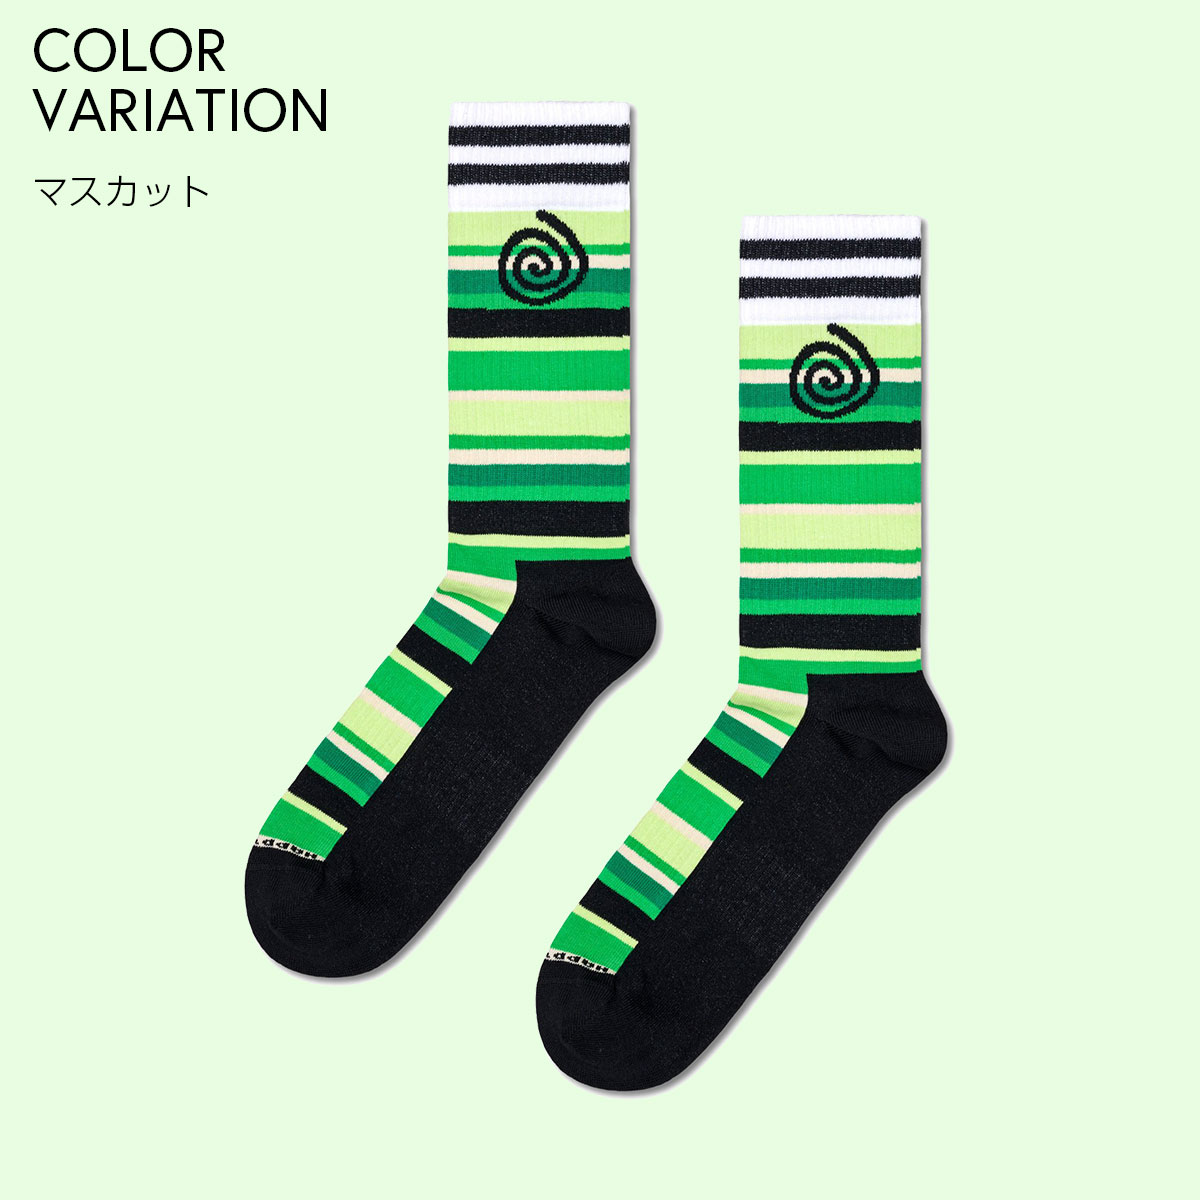 【24SS】Happy Socks ハッピーソックス Swirl Stripe Sneaker ( スワール＆ストライプ ) クルー丈 ソックス ユニセックス メンズ ＆ レディース スポーツ 10240107